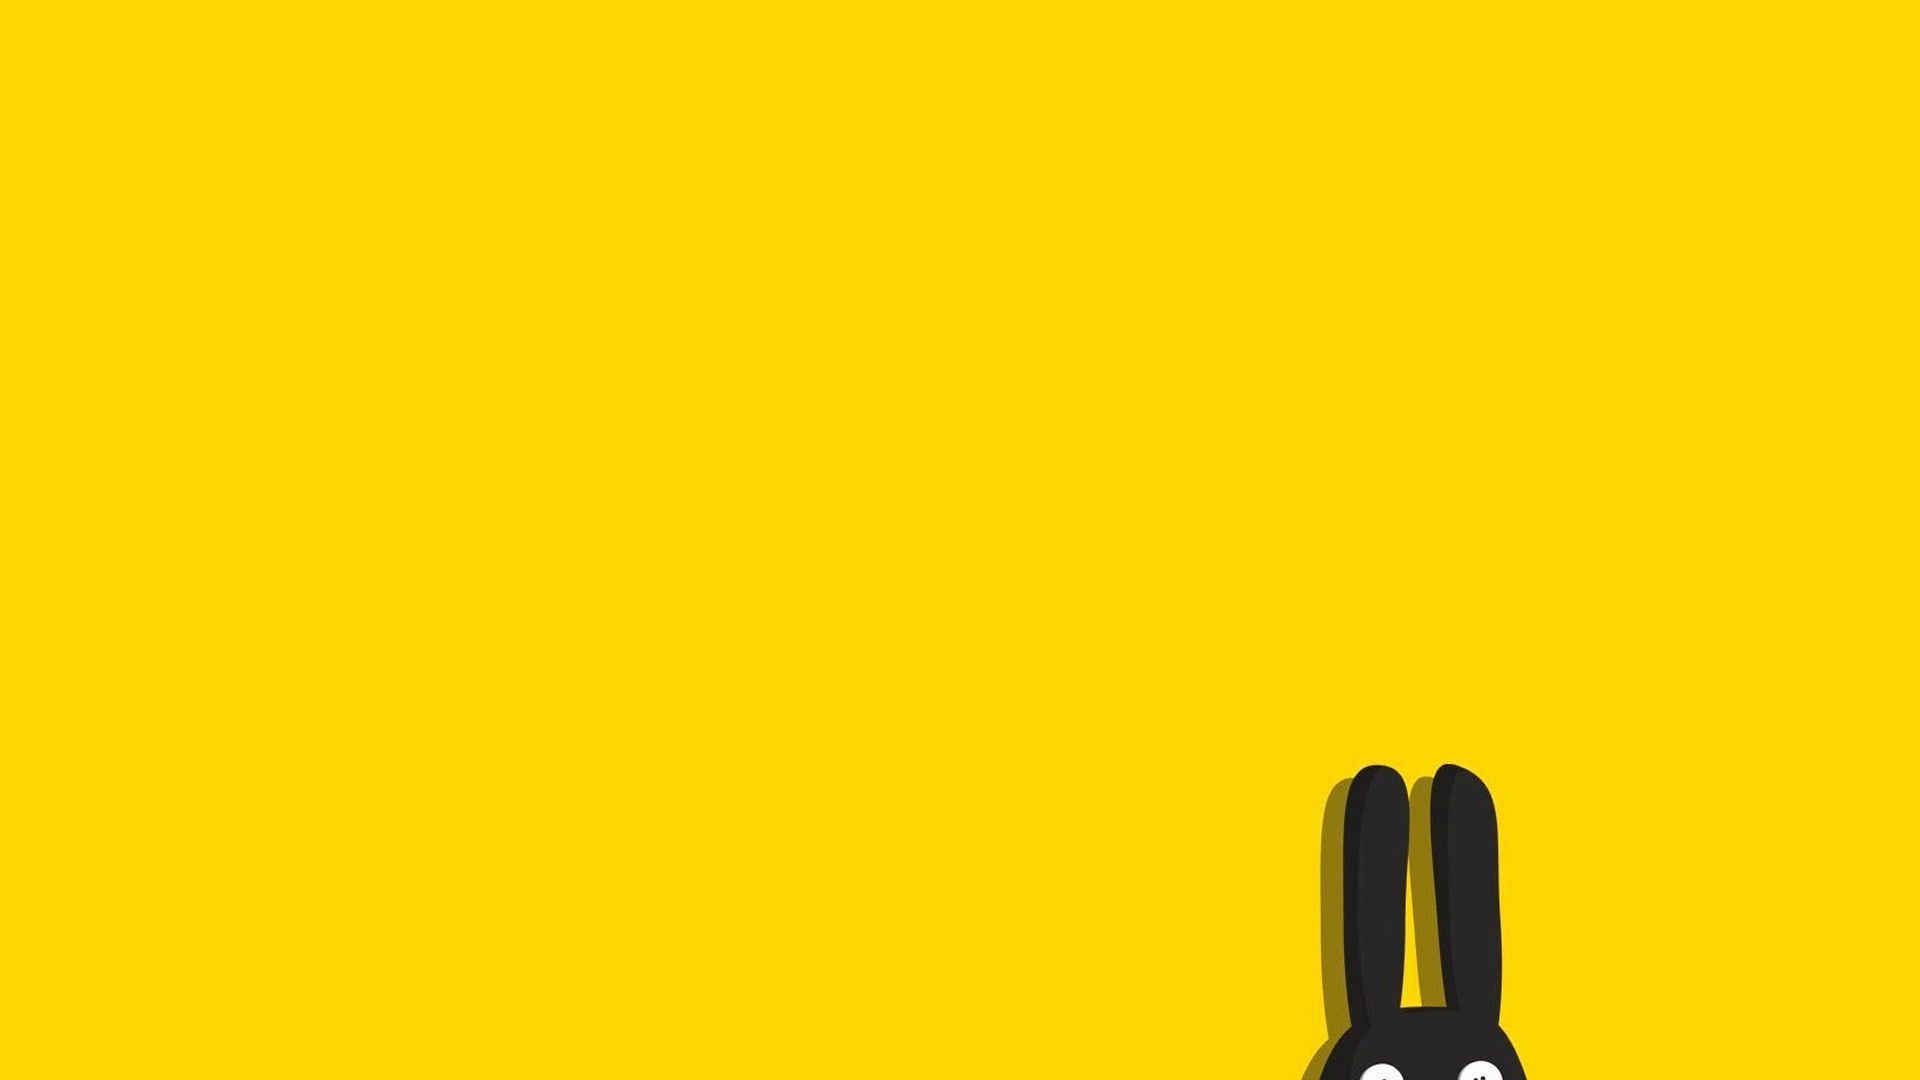 A black rabbit on yellow background - Korean